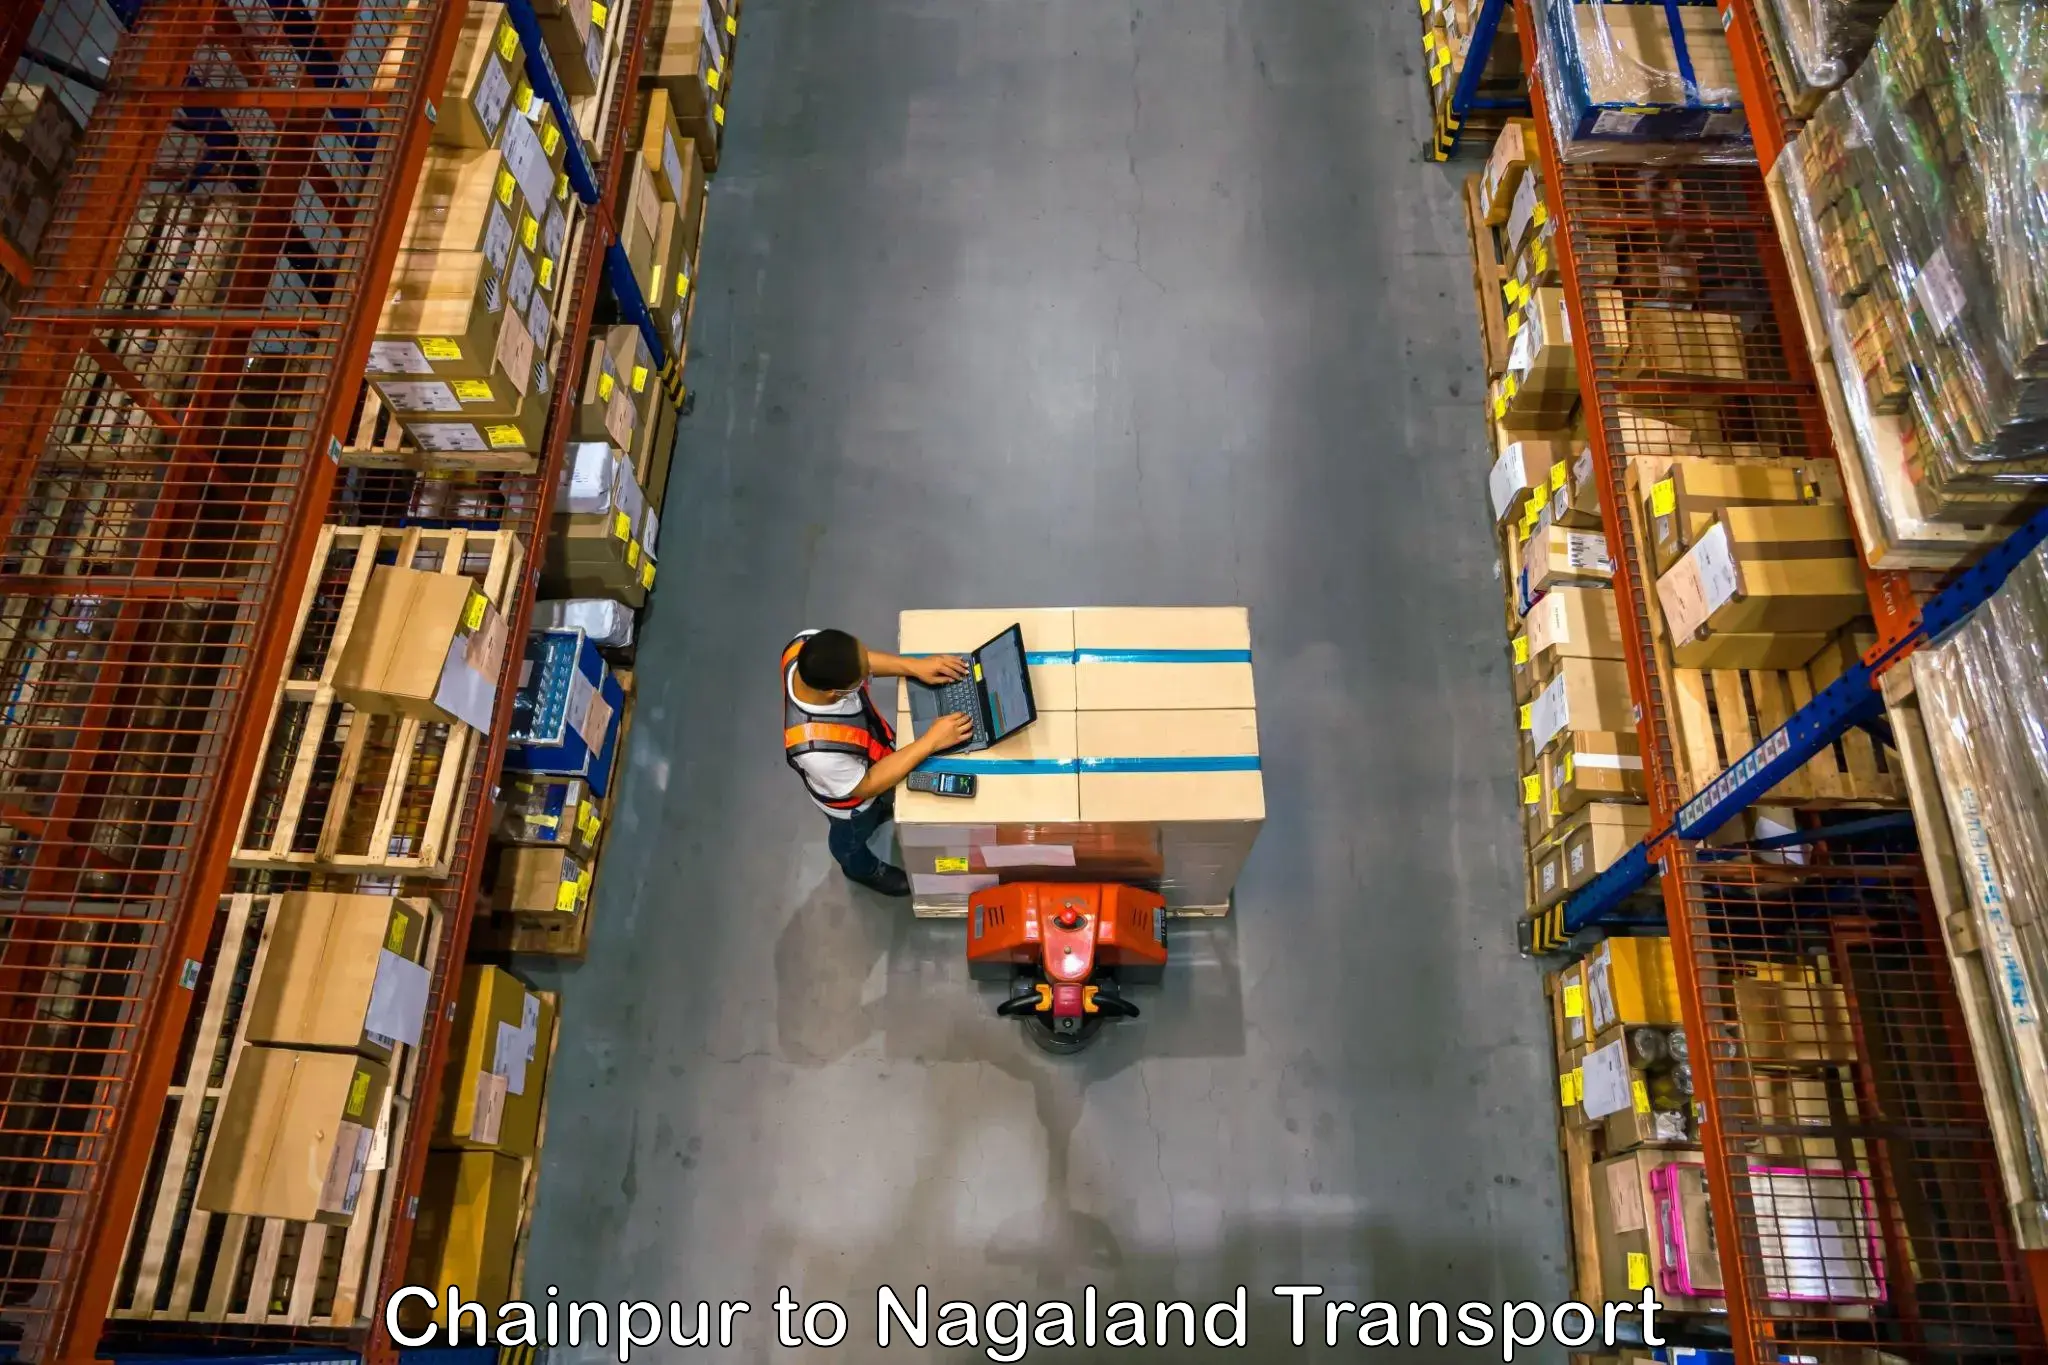 Bike transport service Chainpur to Nagaland